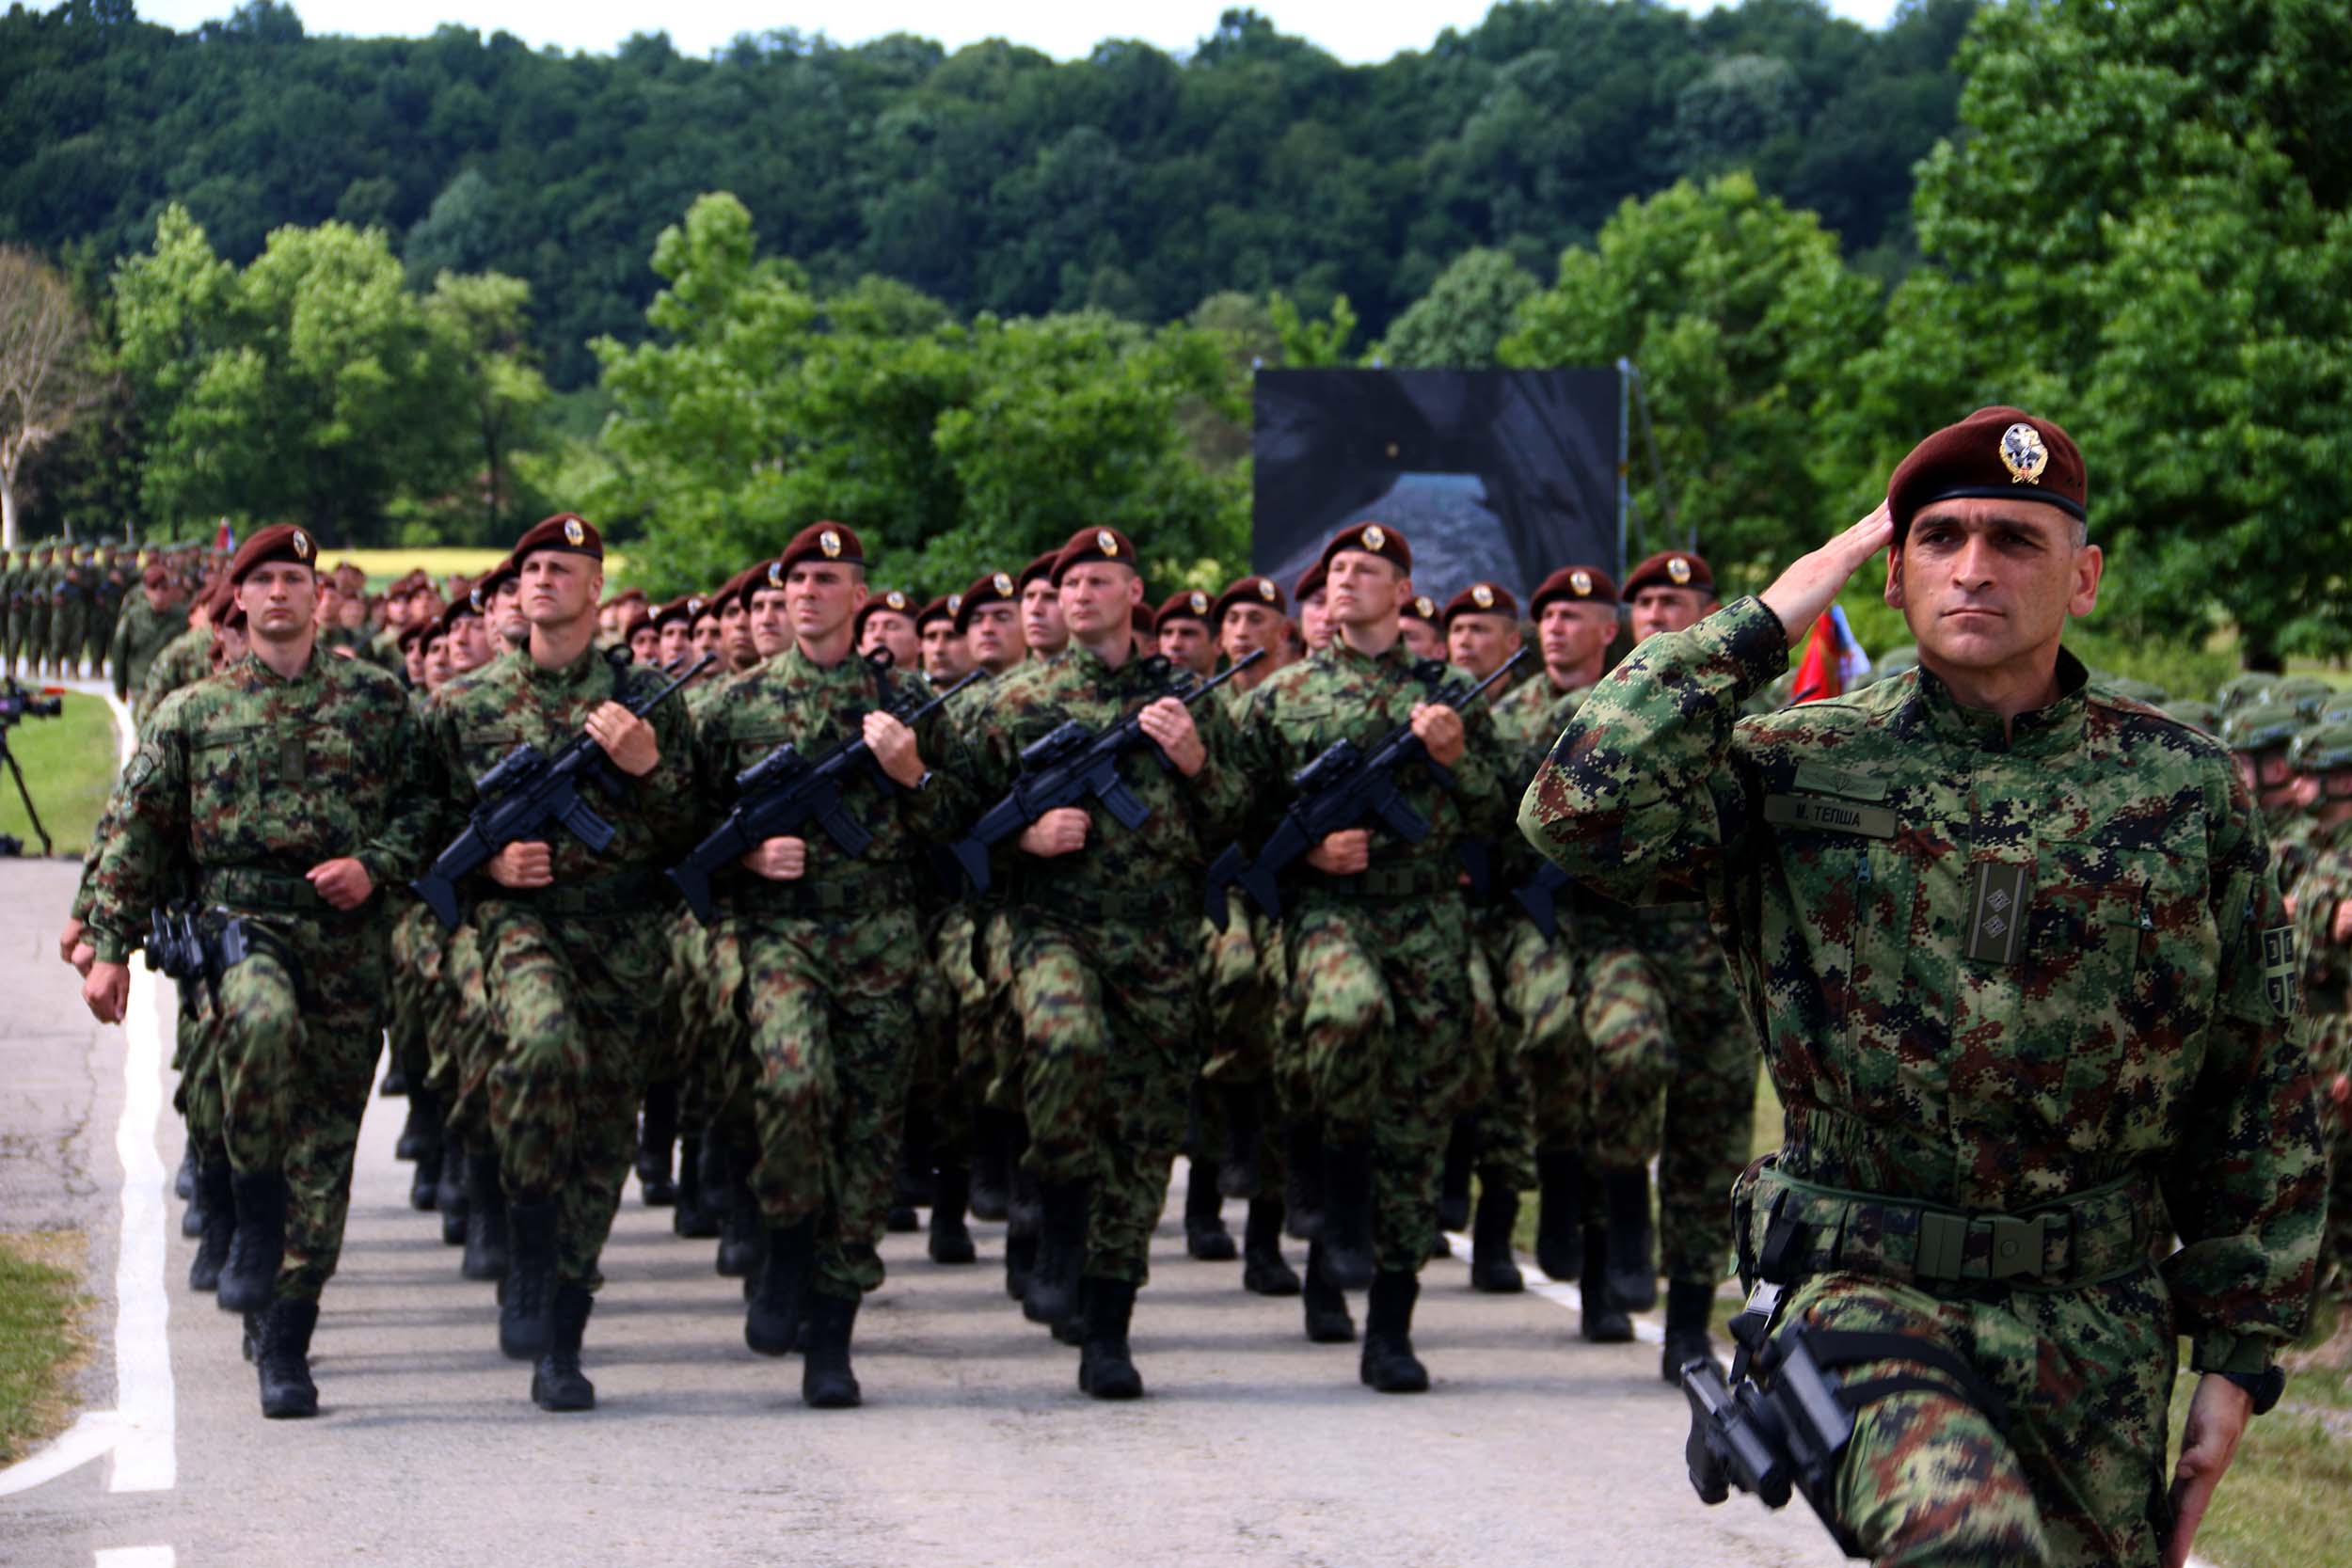 72 Бригада. Застава бригади имени Святого Георгия. 72 Бригада Орр. Специальная бригада Сербии. 35 бригада сво